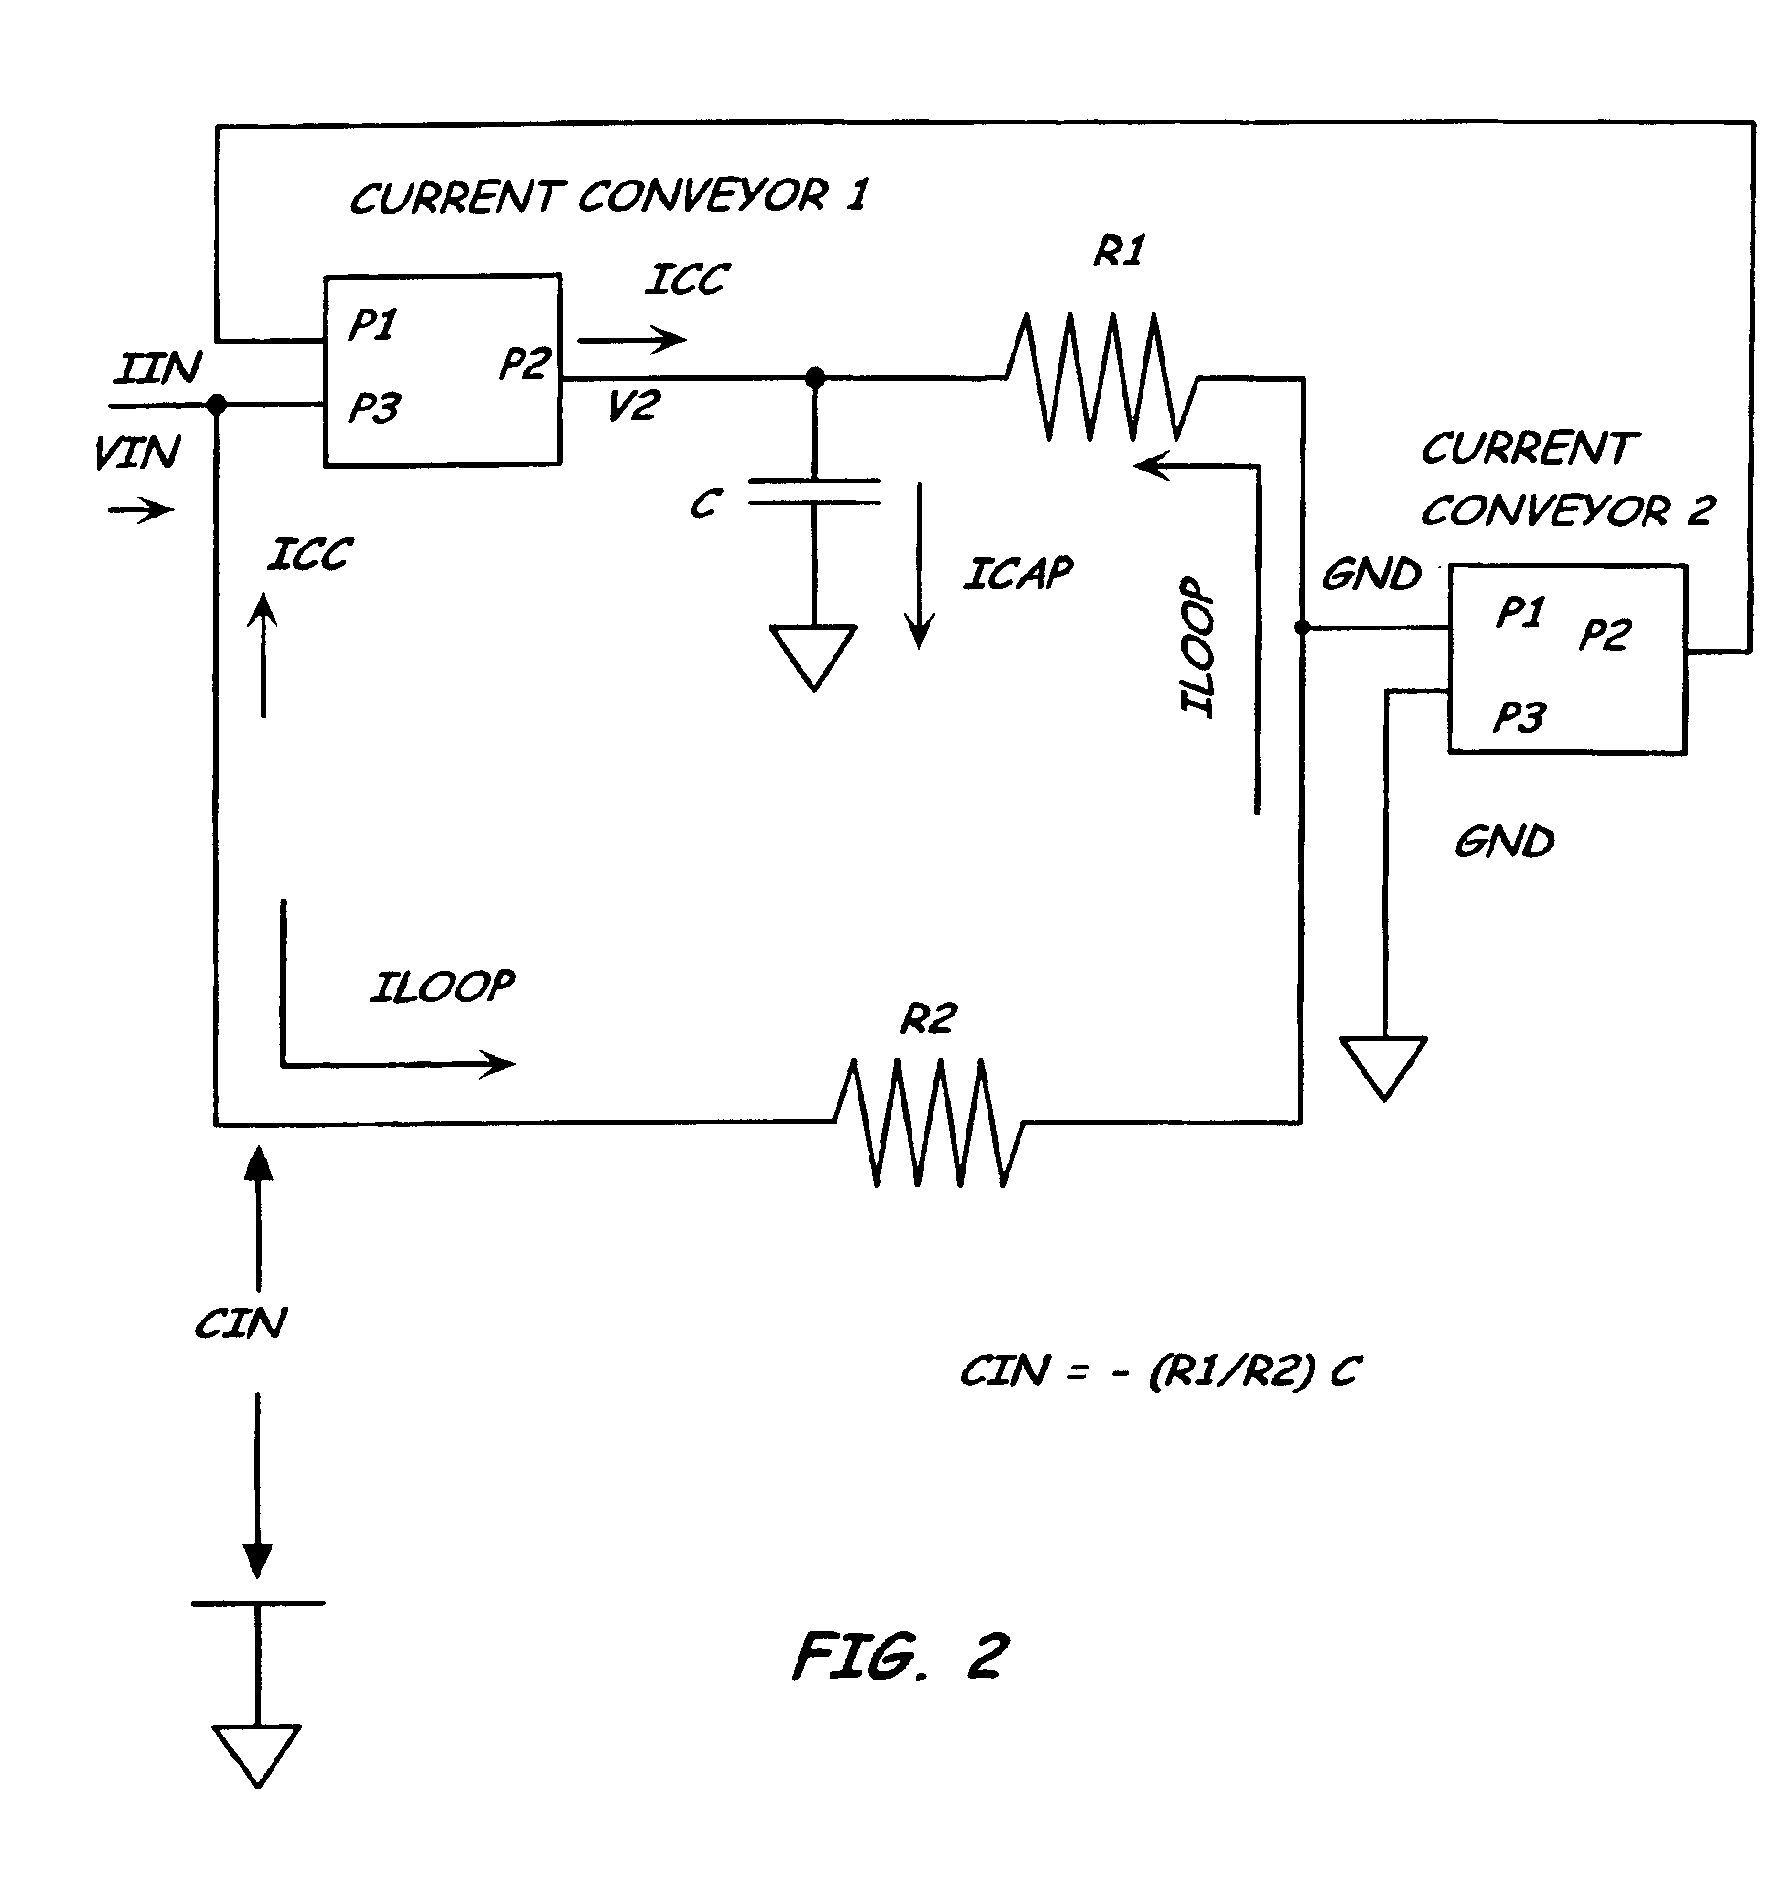 Widely tunable ring oscillator utilizing active negative capacitance